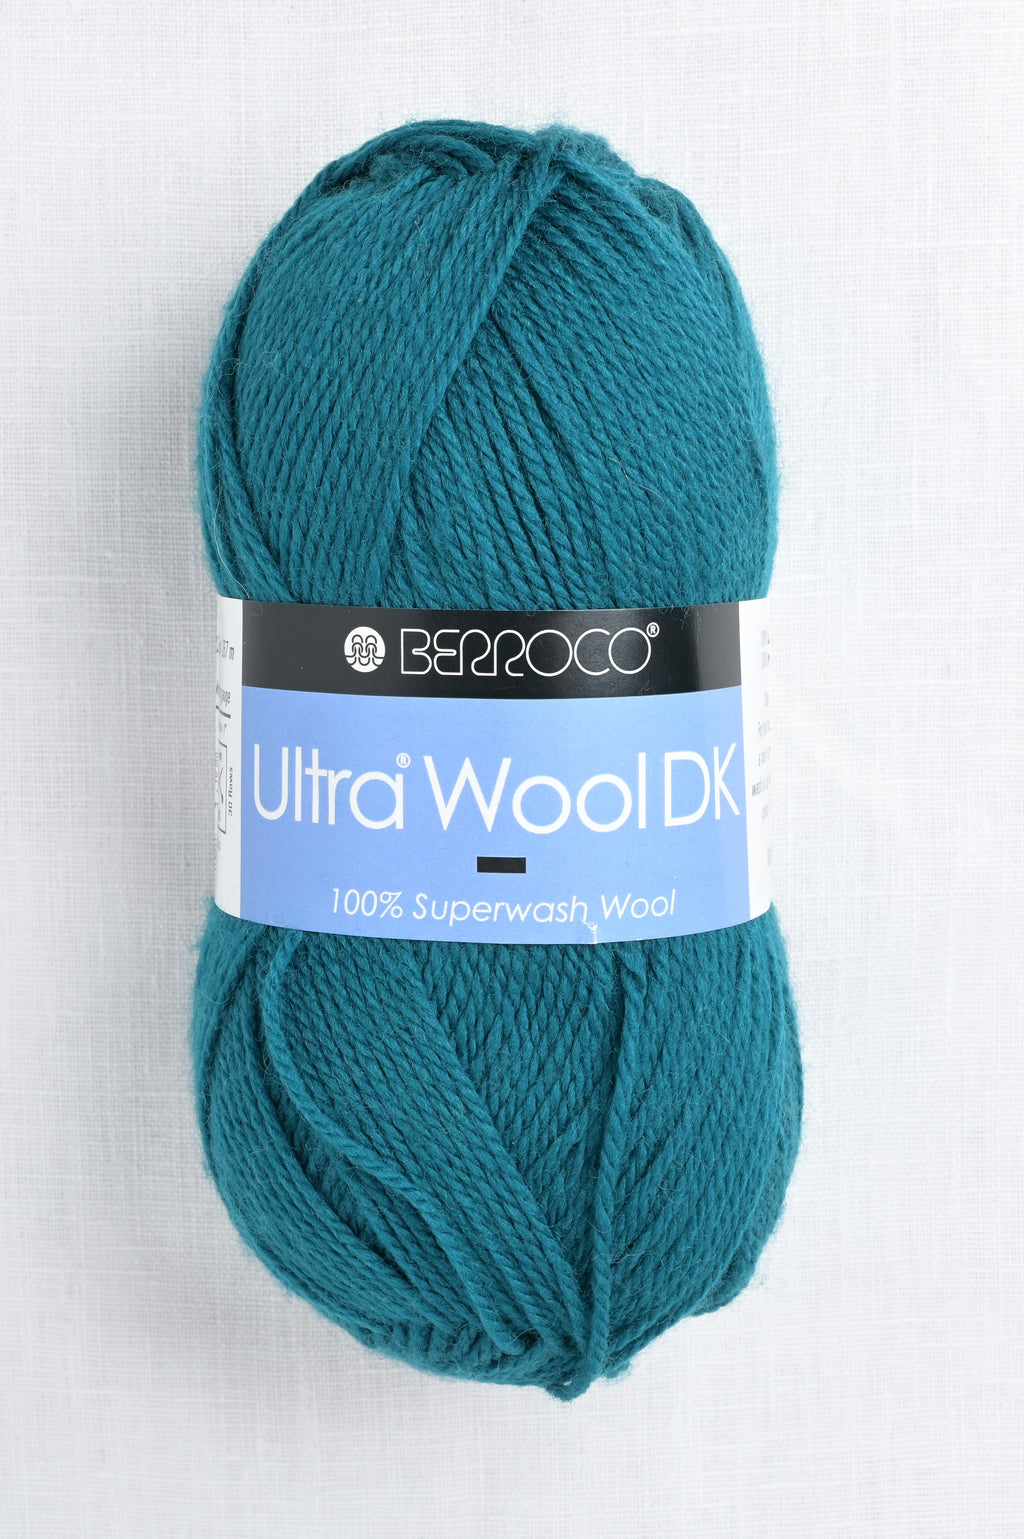 Berroco Ultra Wool DK Kale Wool and – Company 8361